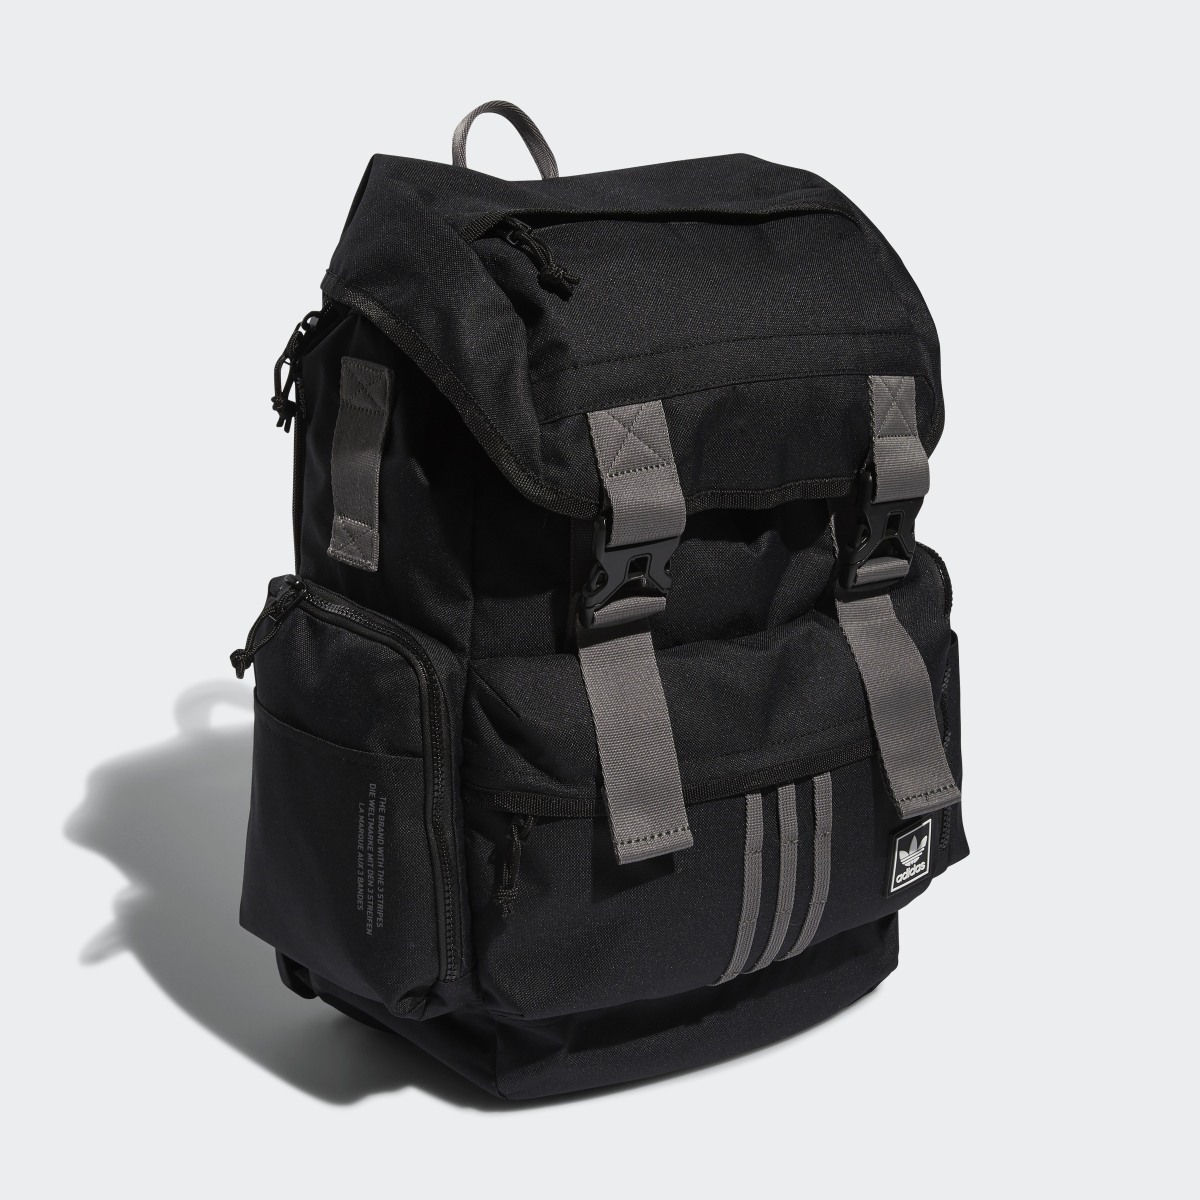 Adidas Utility Backpack 4.0. 4